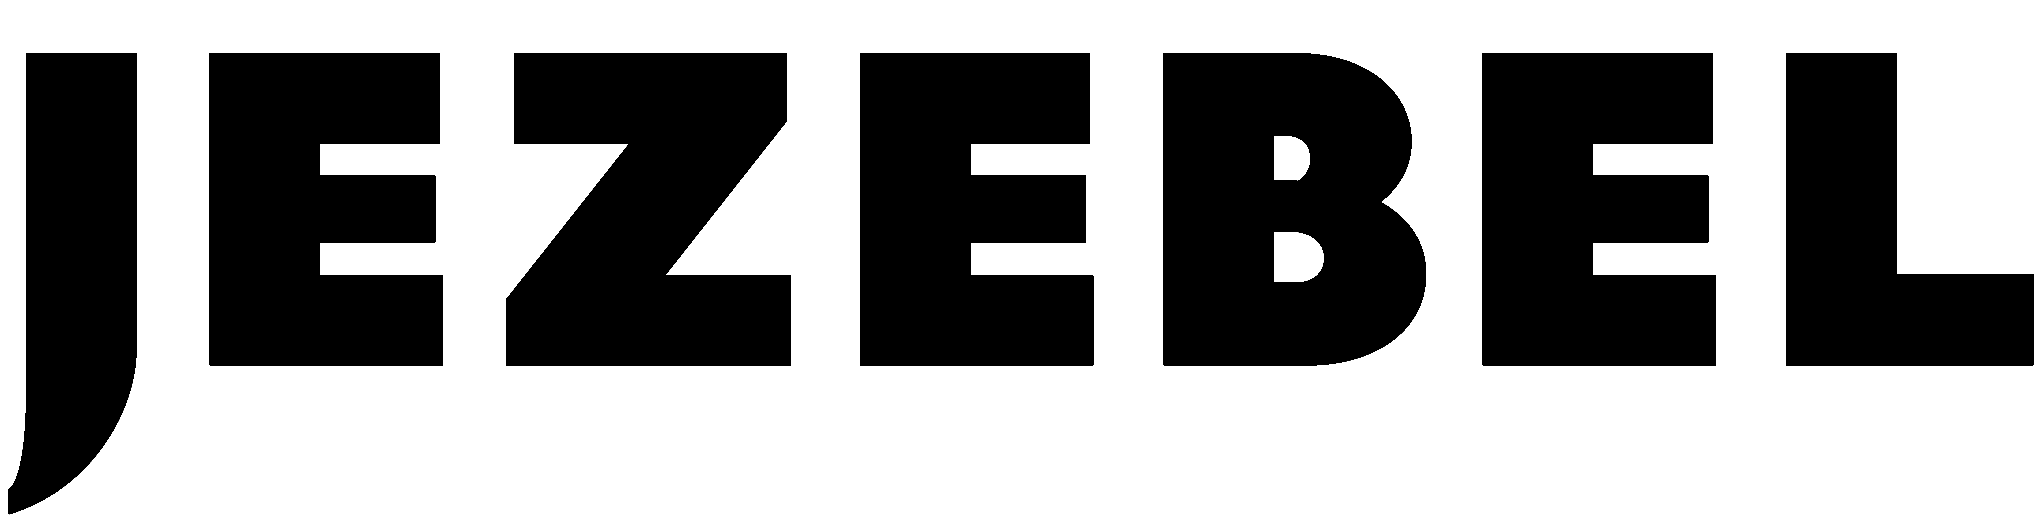 Jezebel_Logo.png